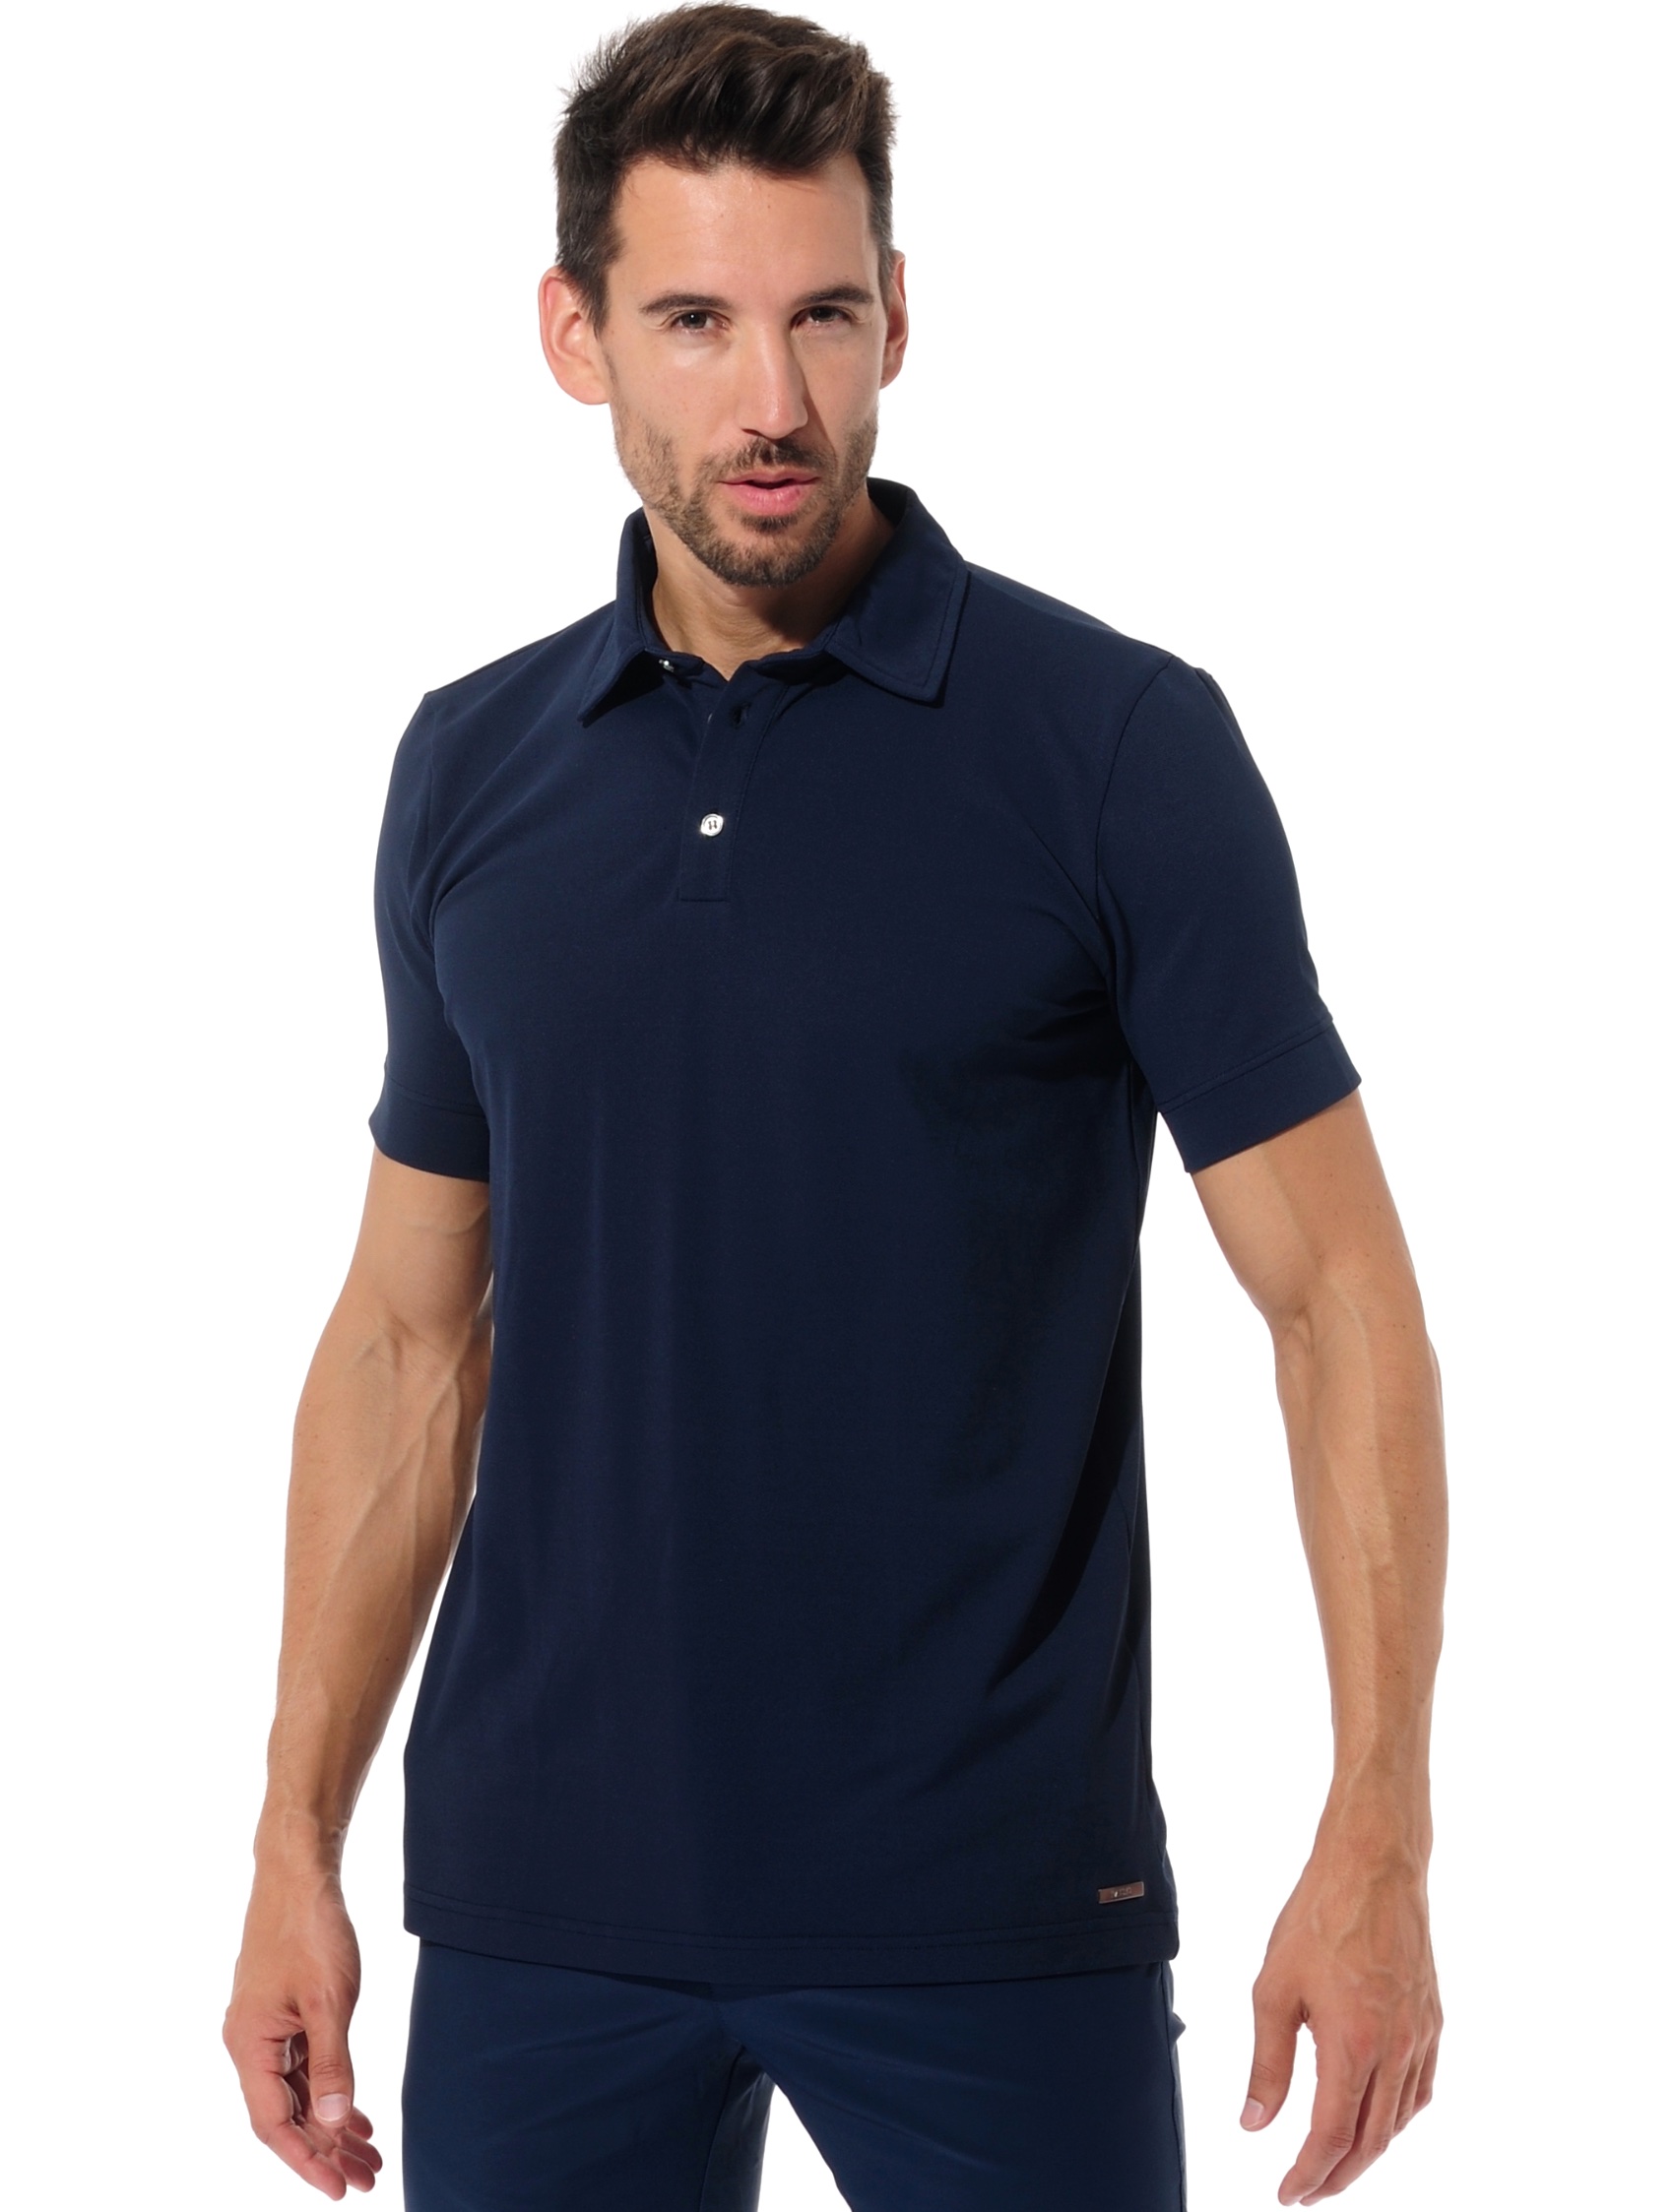 Jersey polo shirt navy 